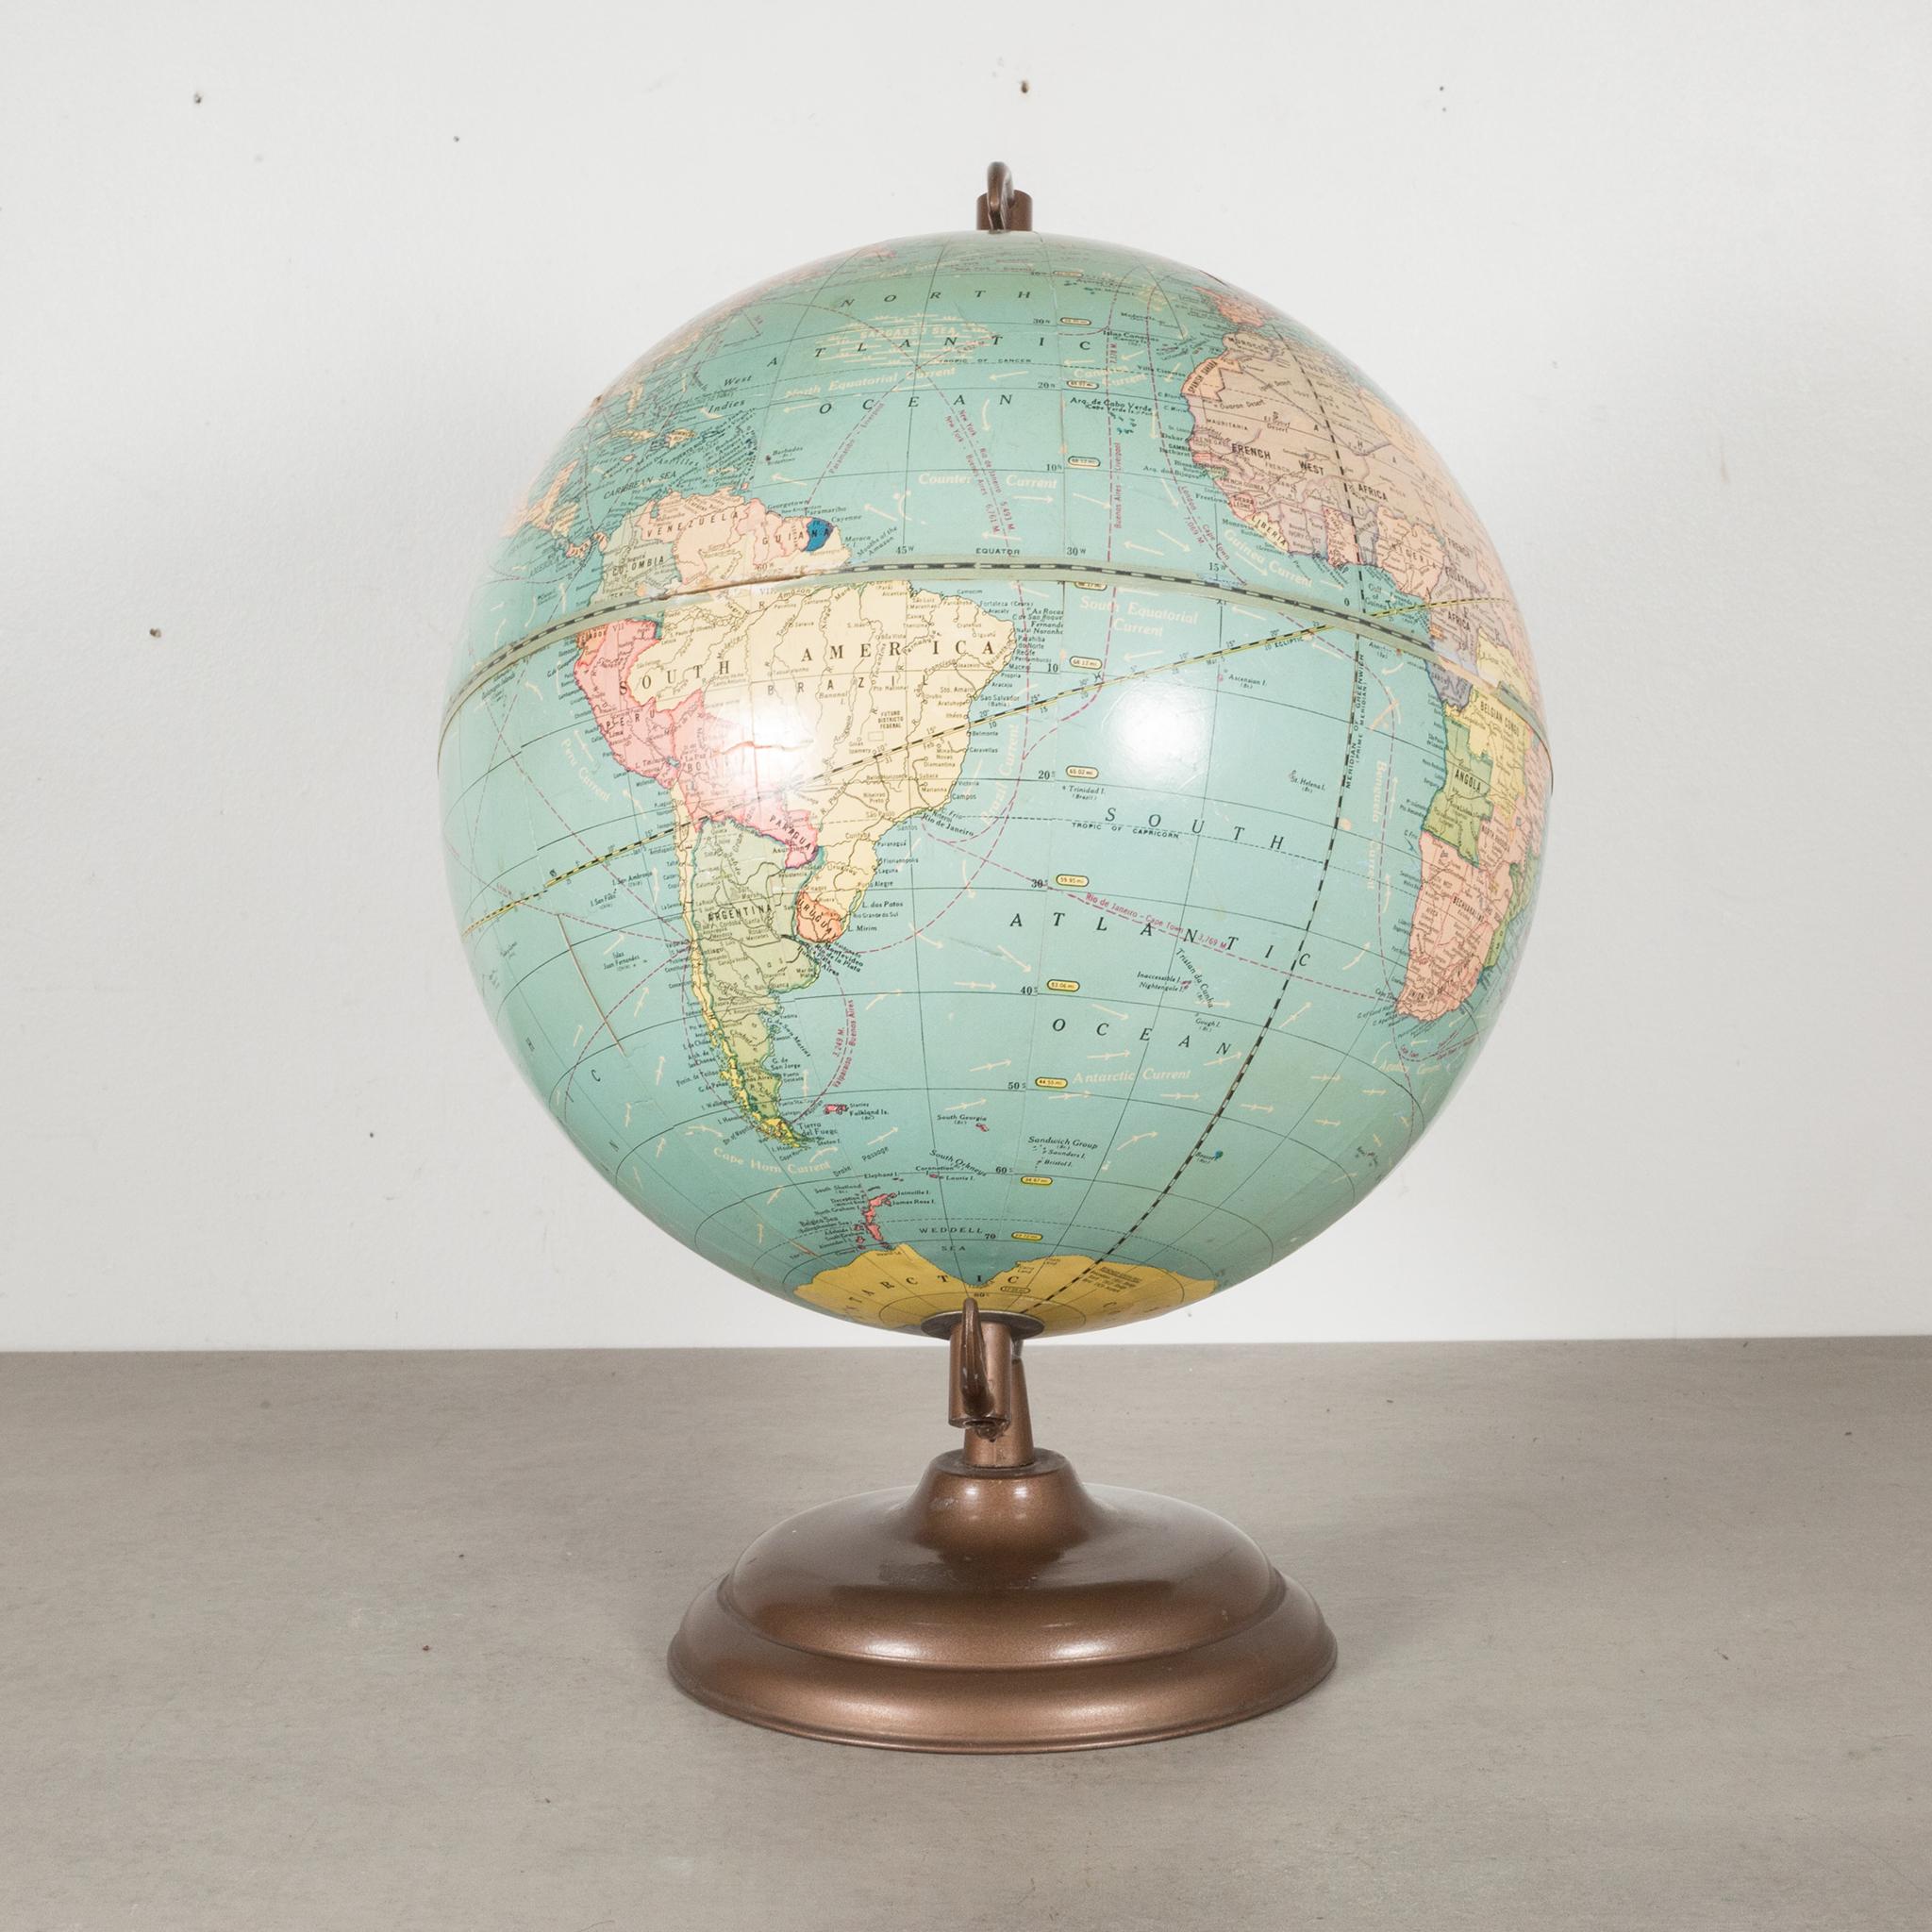 cram's universal terrestrial globe